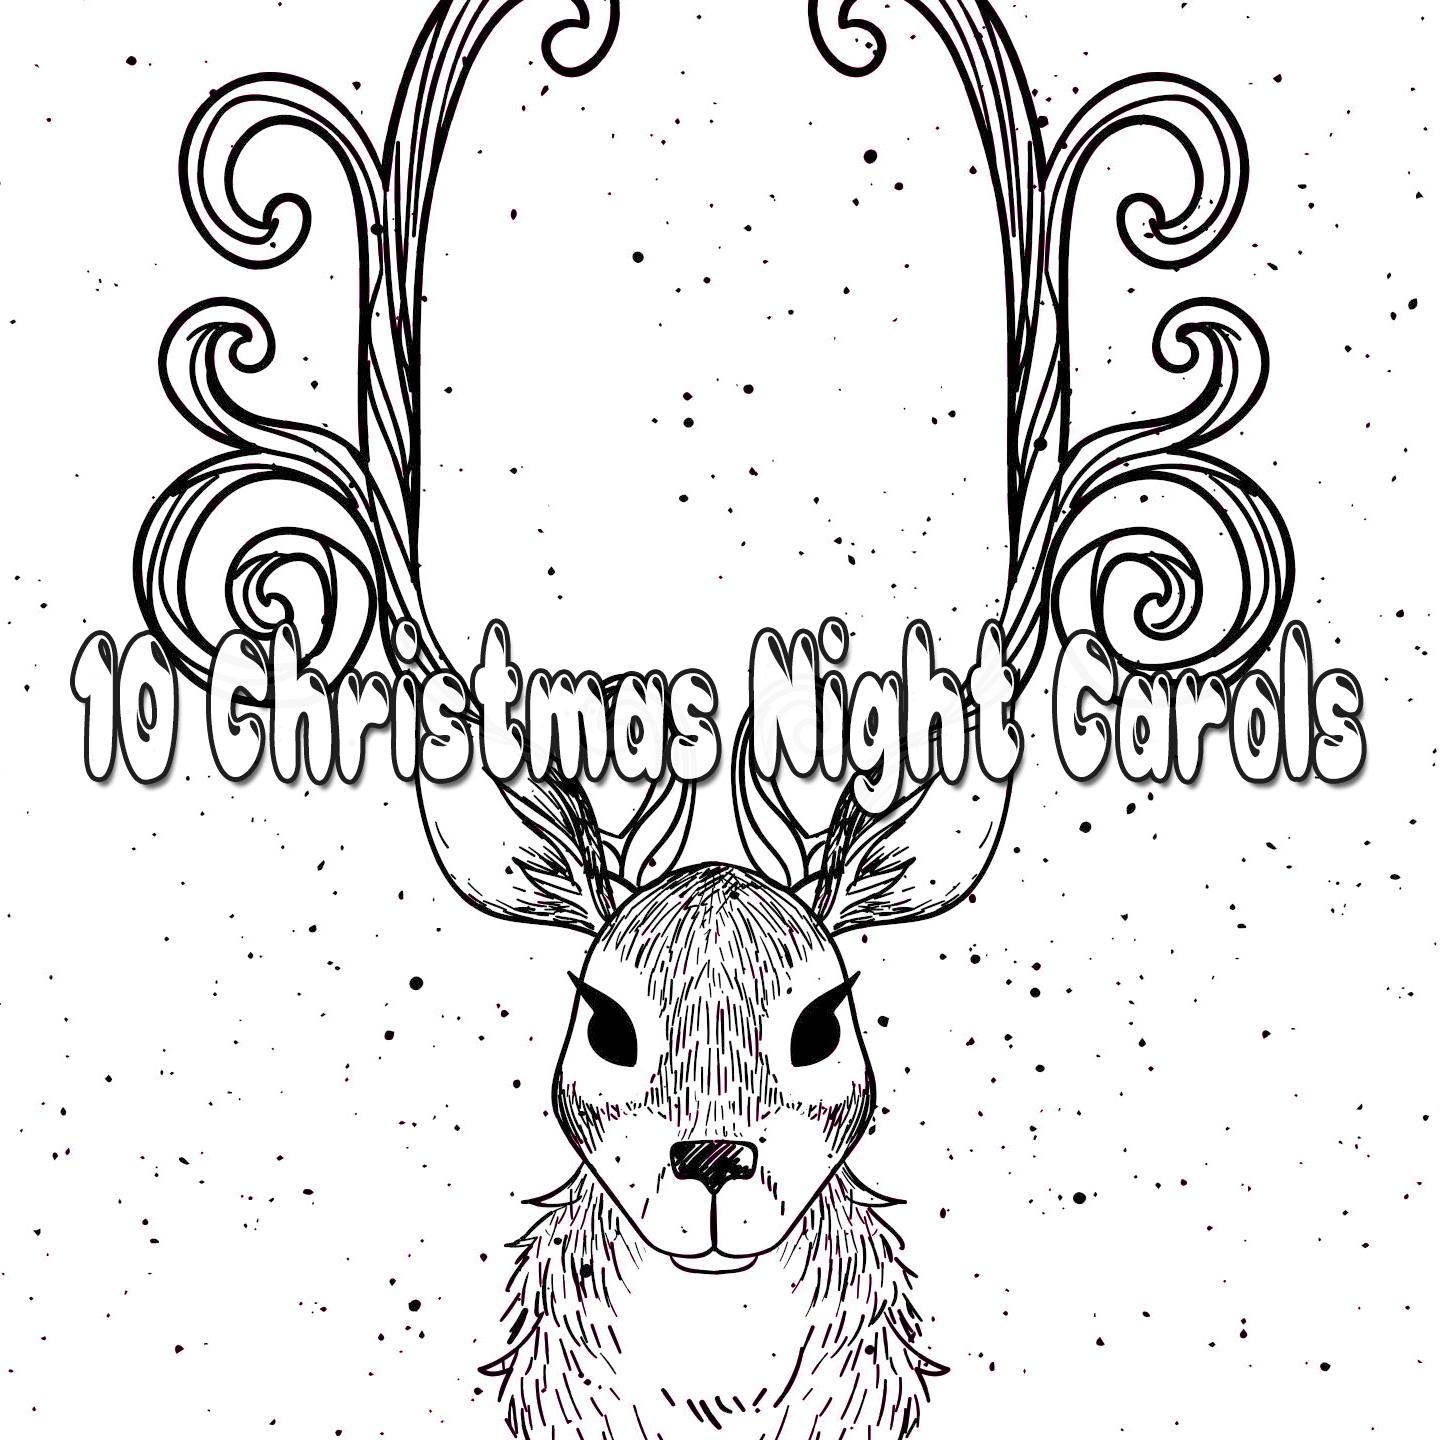 10 Christmas Night Carols